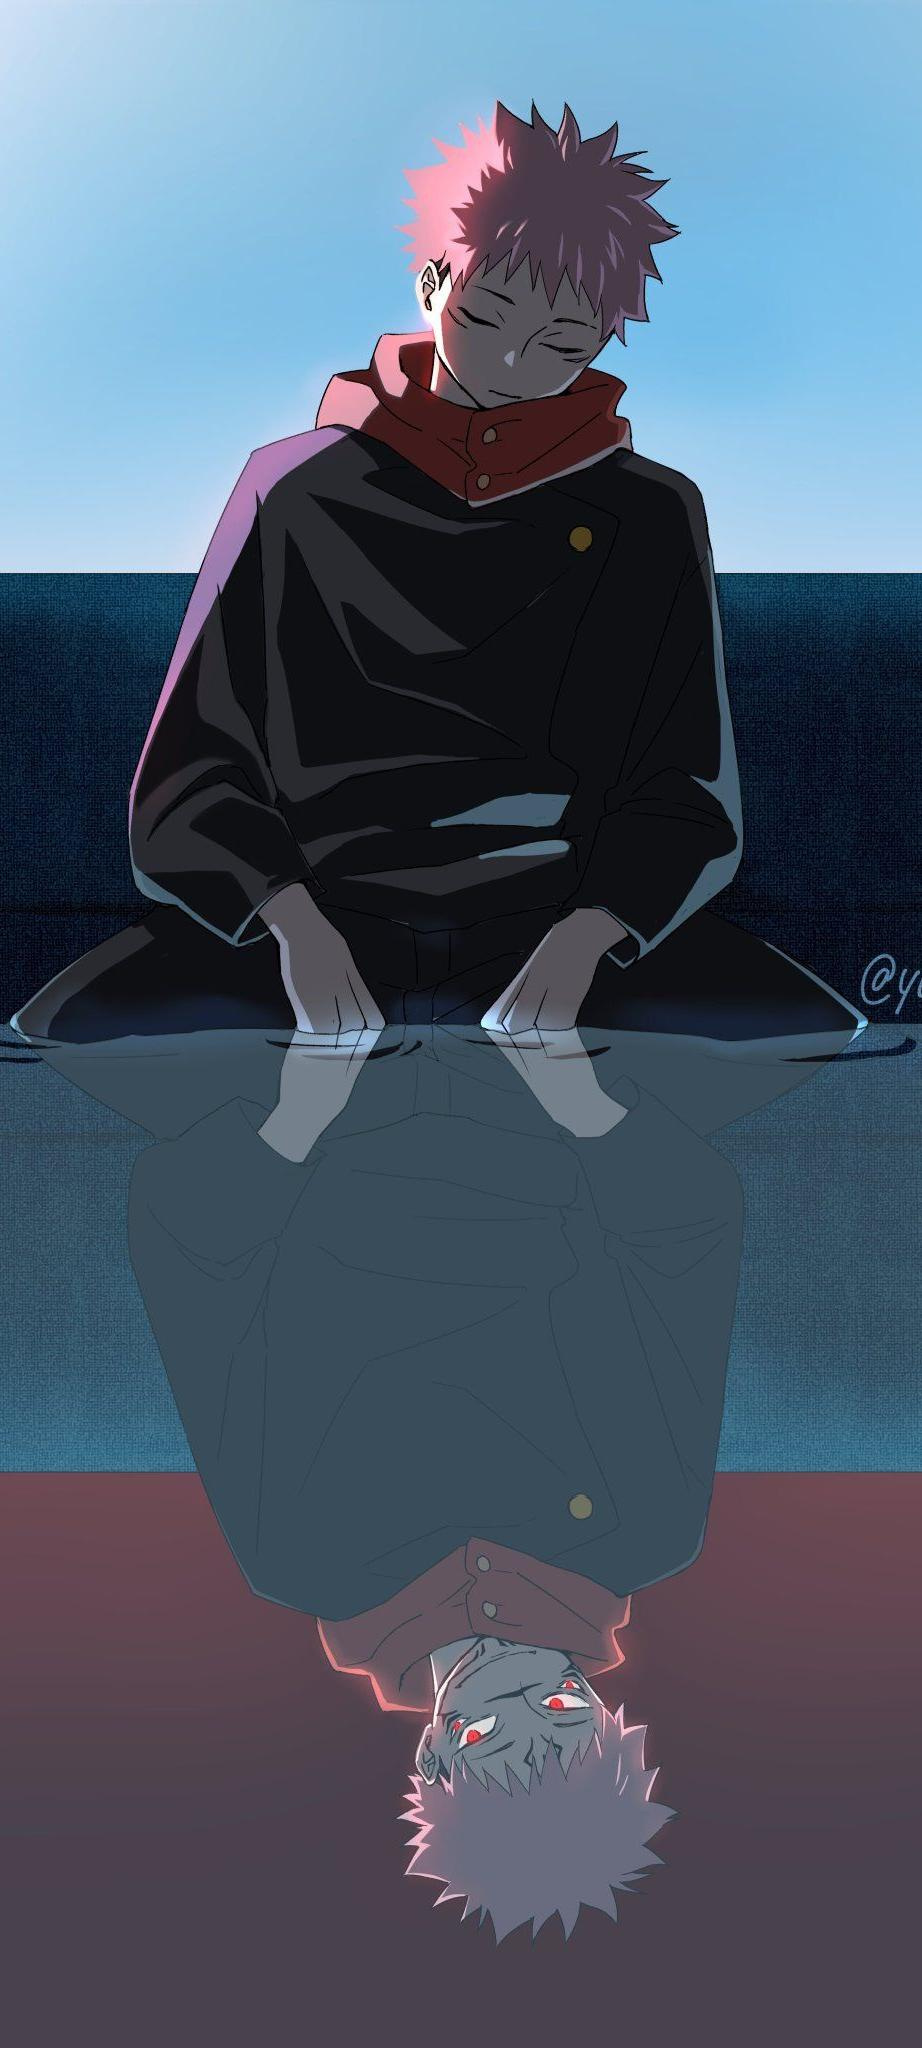 Jujutsu Kaisen 0 Anime Character Wallpaper iPhone Phone 4K #5510e